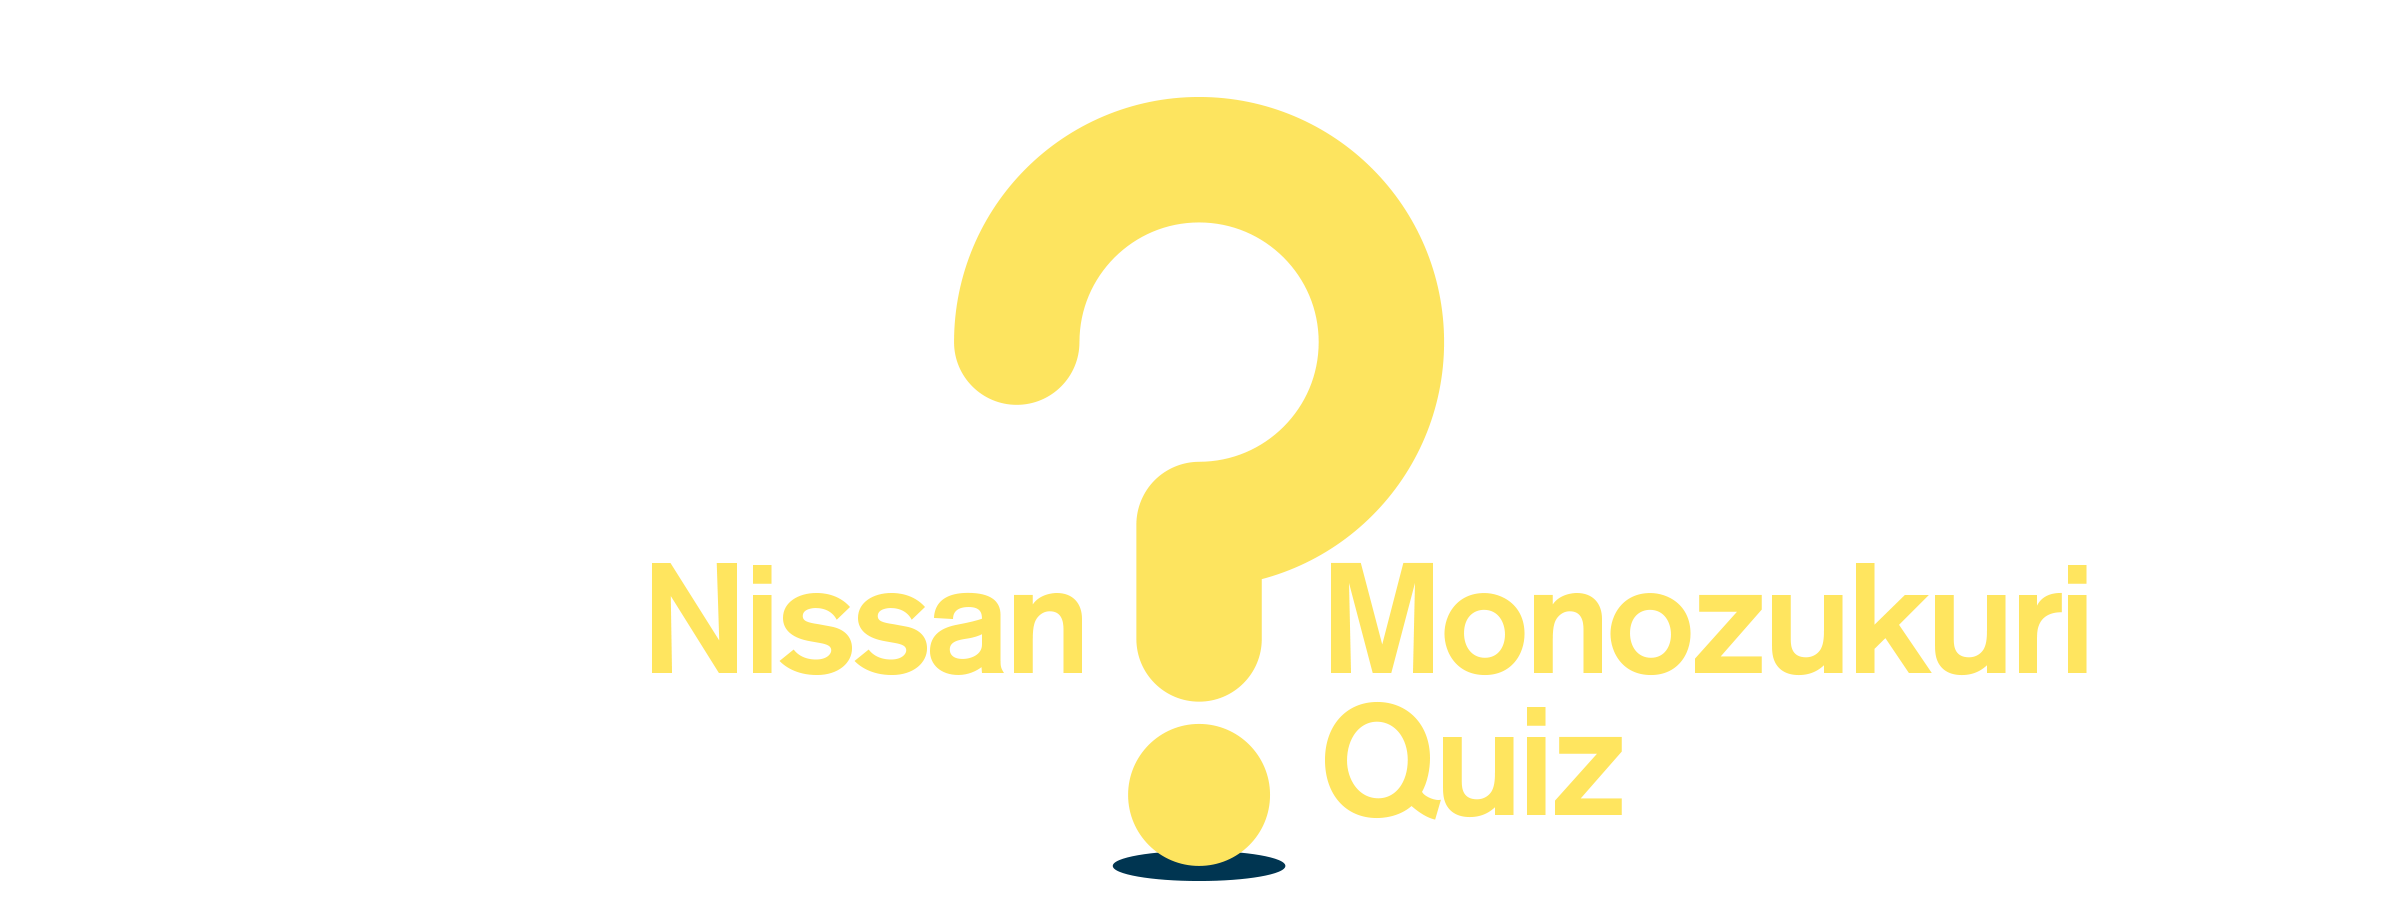 Nissan Monozukuri Quiz